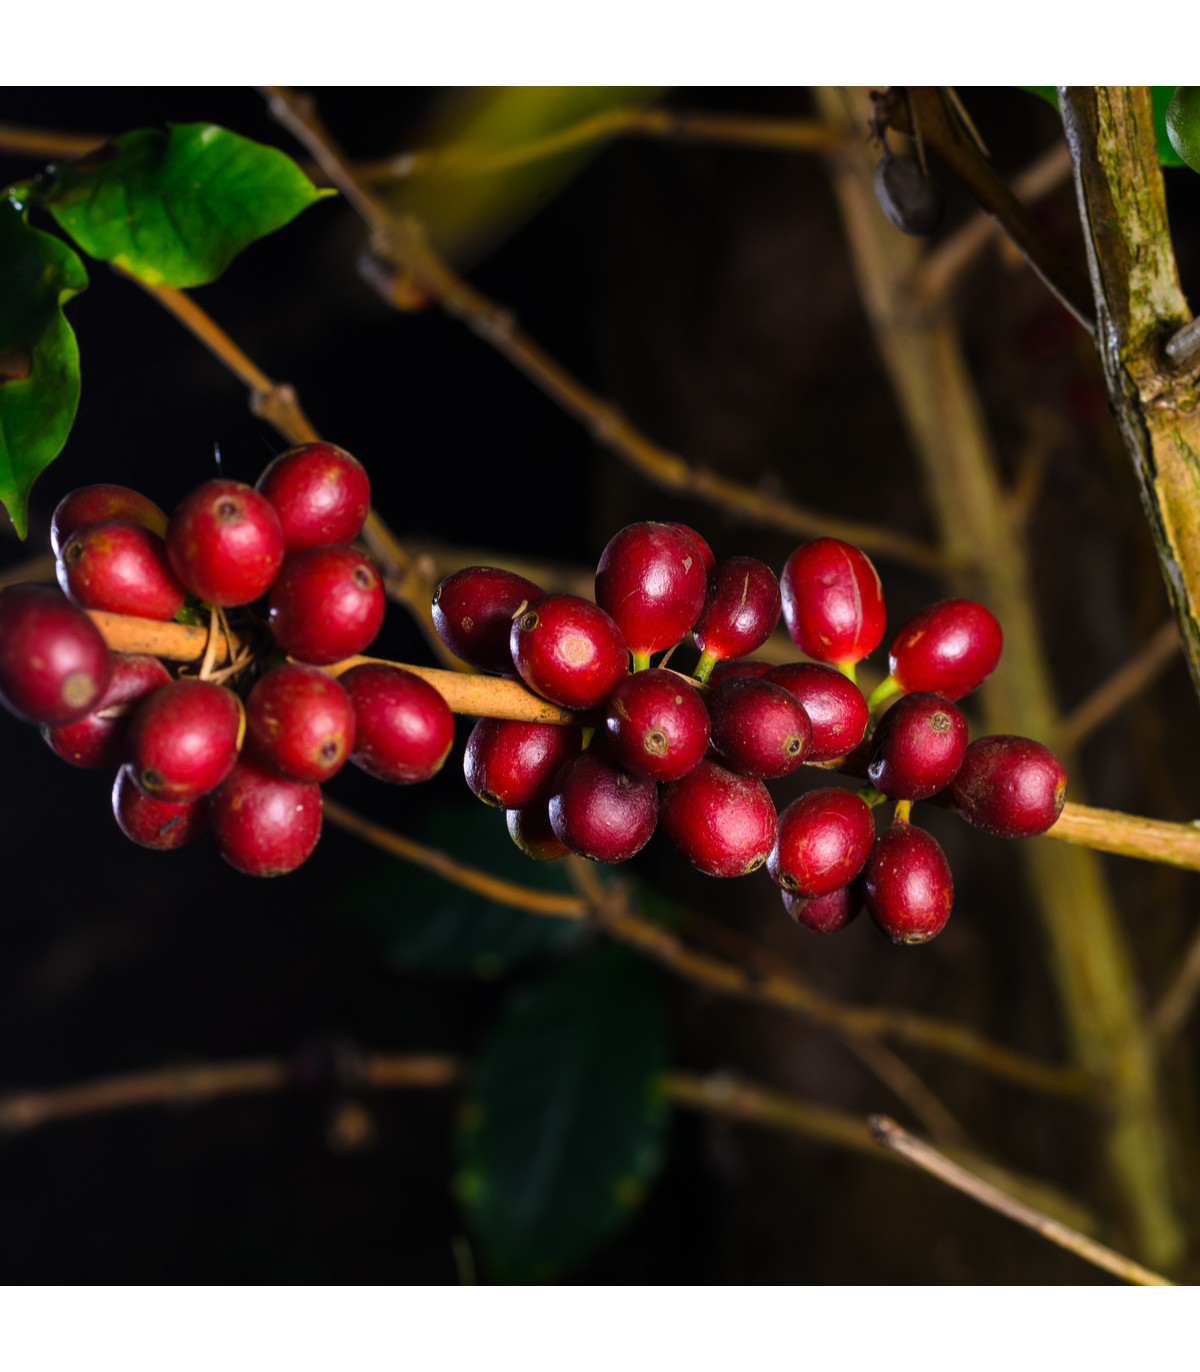 Kávovník Konna hawajský - Coffea konna - osivo kávovníku - 5 ks